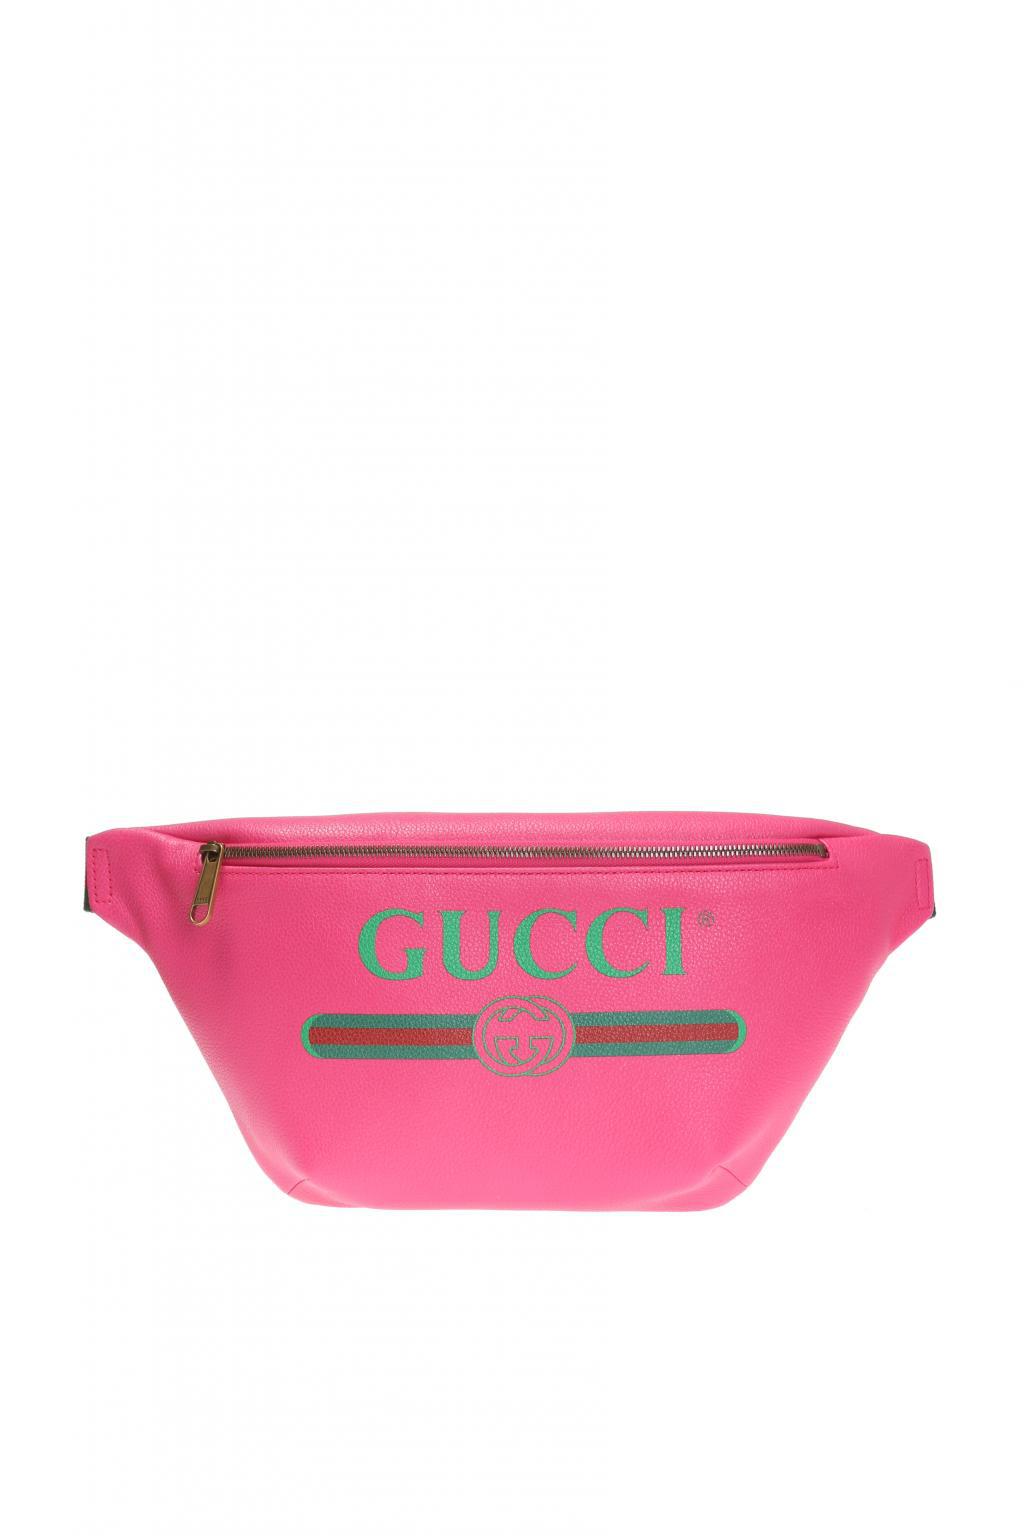 Gucci Leather Logo-printed Belt Bag in Pink for Men - Lyst